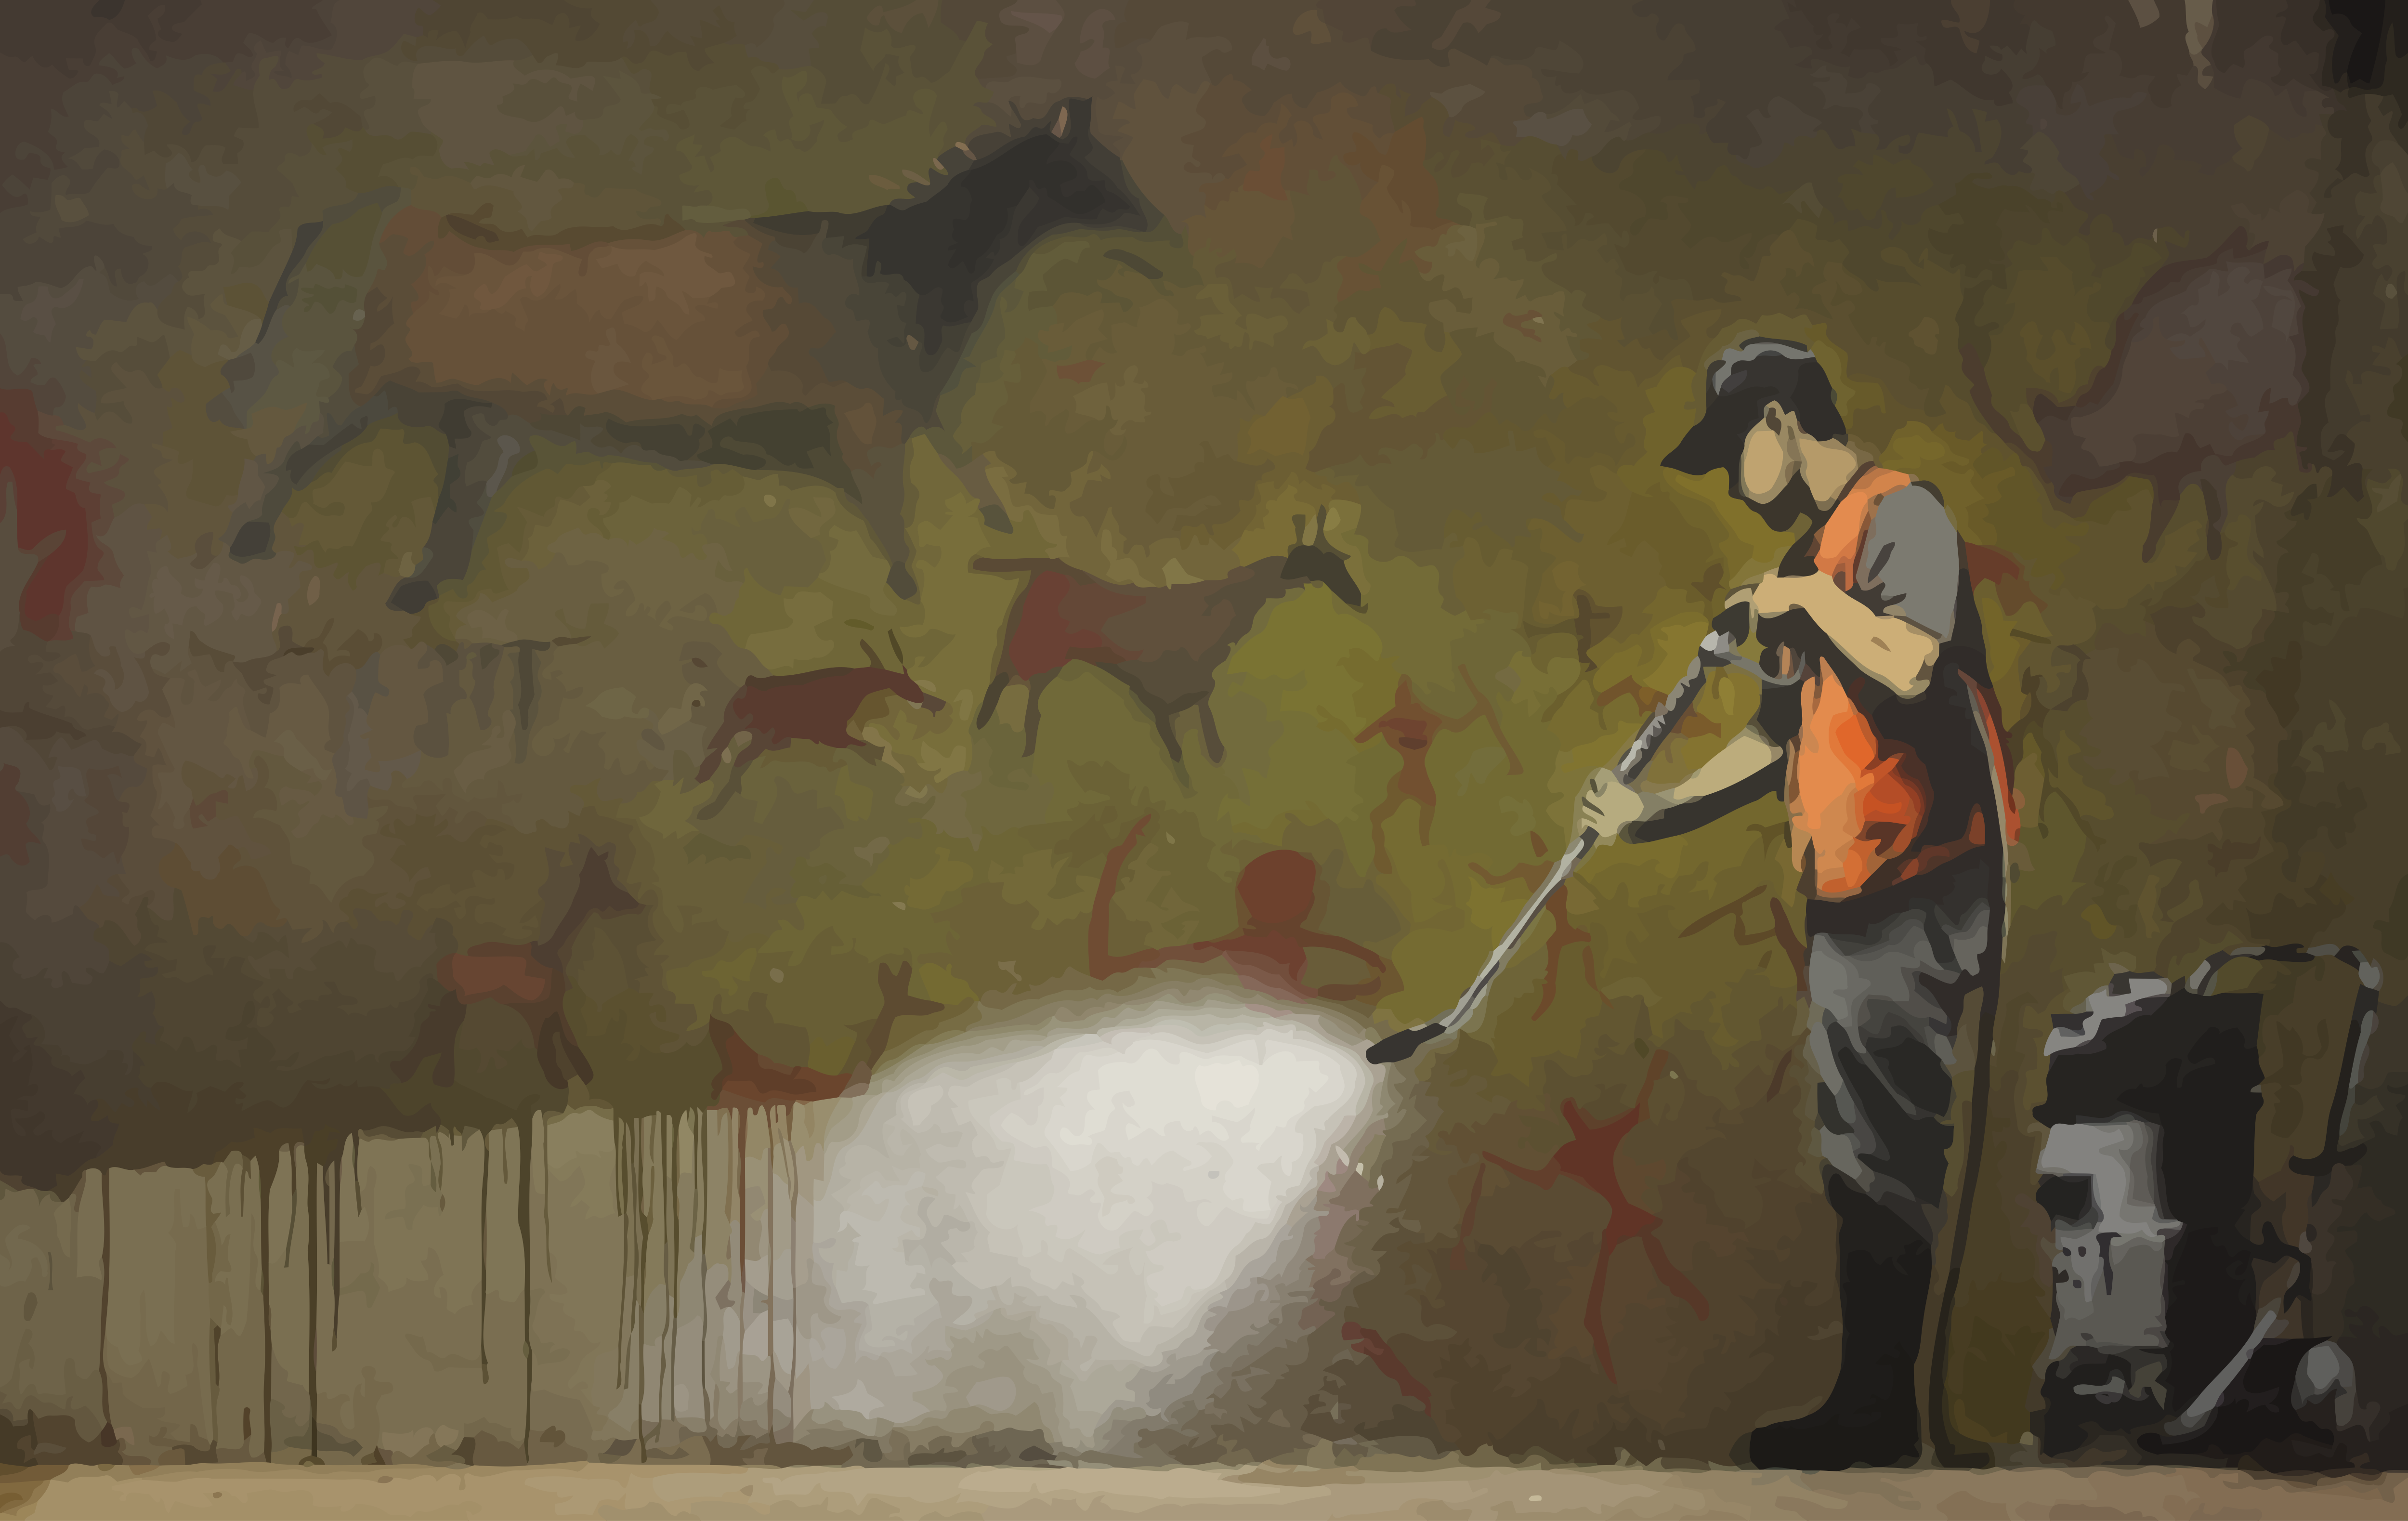 streets, graffiti, Banksy - desktop wallpaper